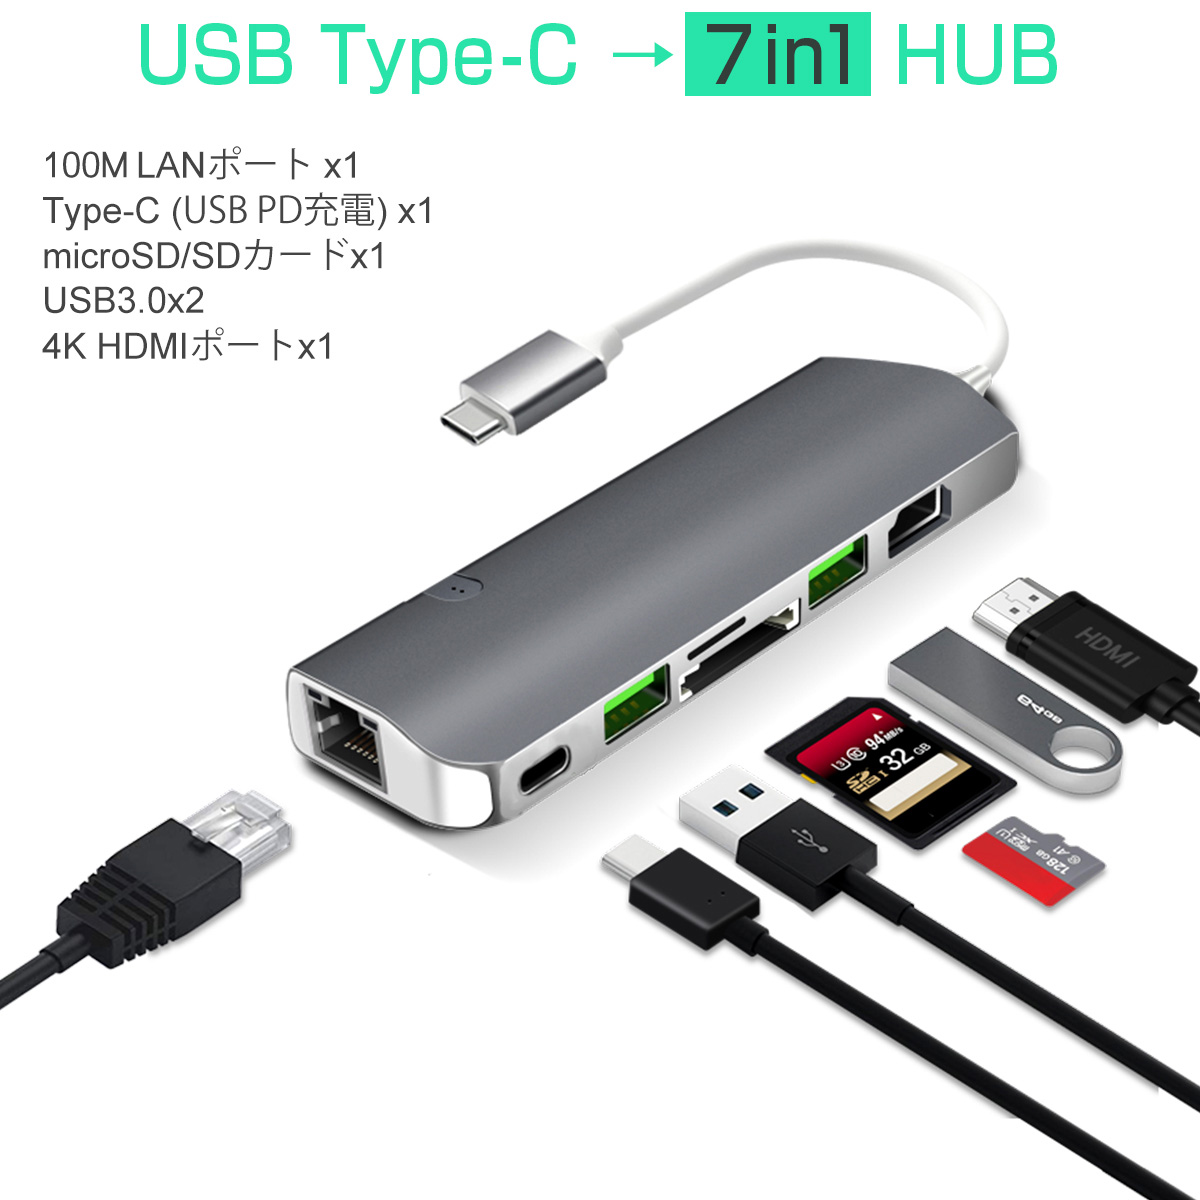 USB Type-C ハブ 7in1 USB3.0x2 4K HDMI 1Gbps有線LAN PD充電 microSD SDスロット 拡張 変換 スペースグレイ 軽量 Galaxy MacBook ChromeBook VAIO Mac Windows対応 3ヶ月保証